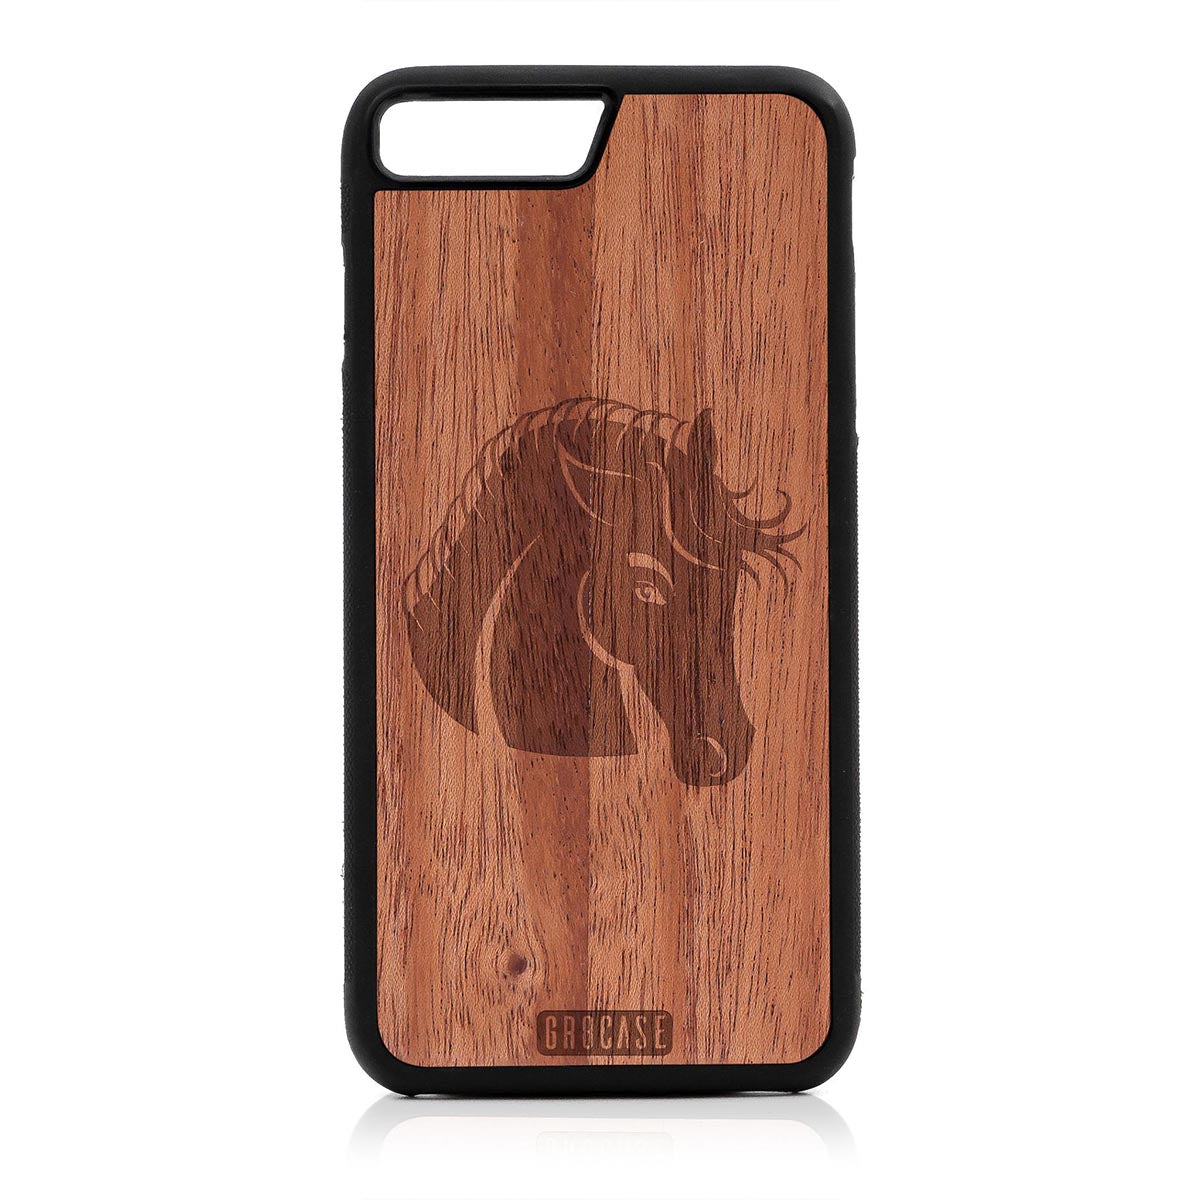 Horse Design Wood Case For iPhone 7 Plus / 8 Plus by GR8CASE